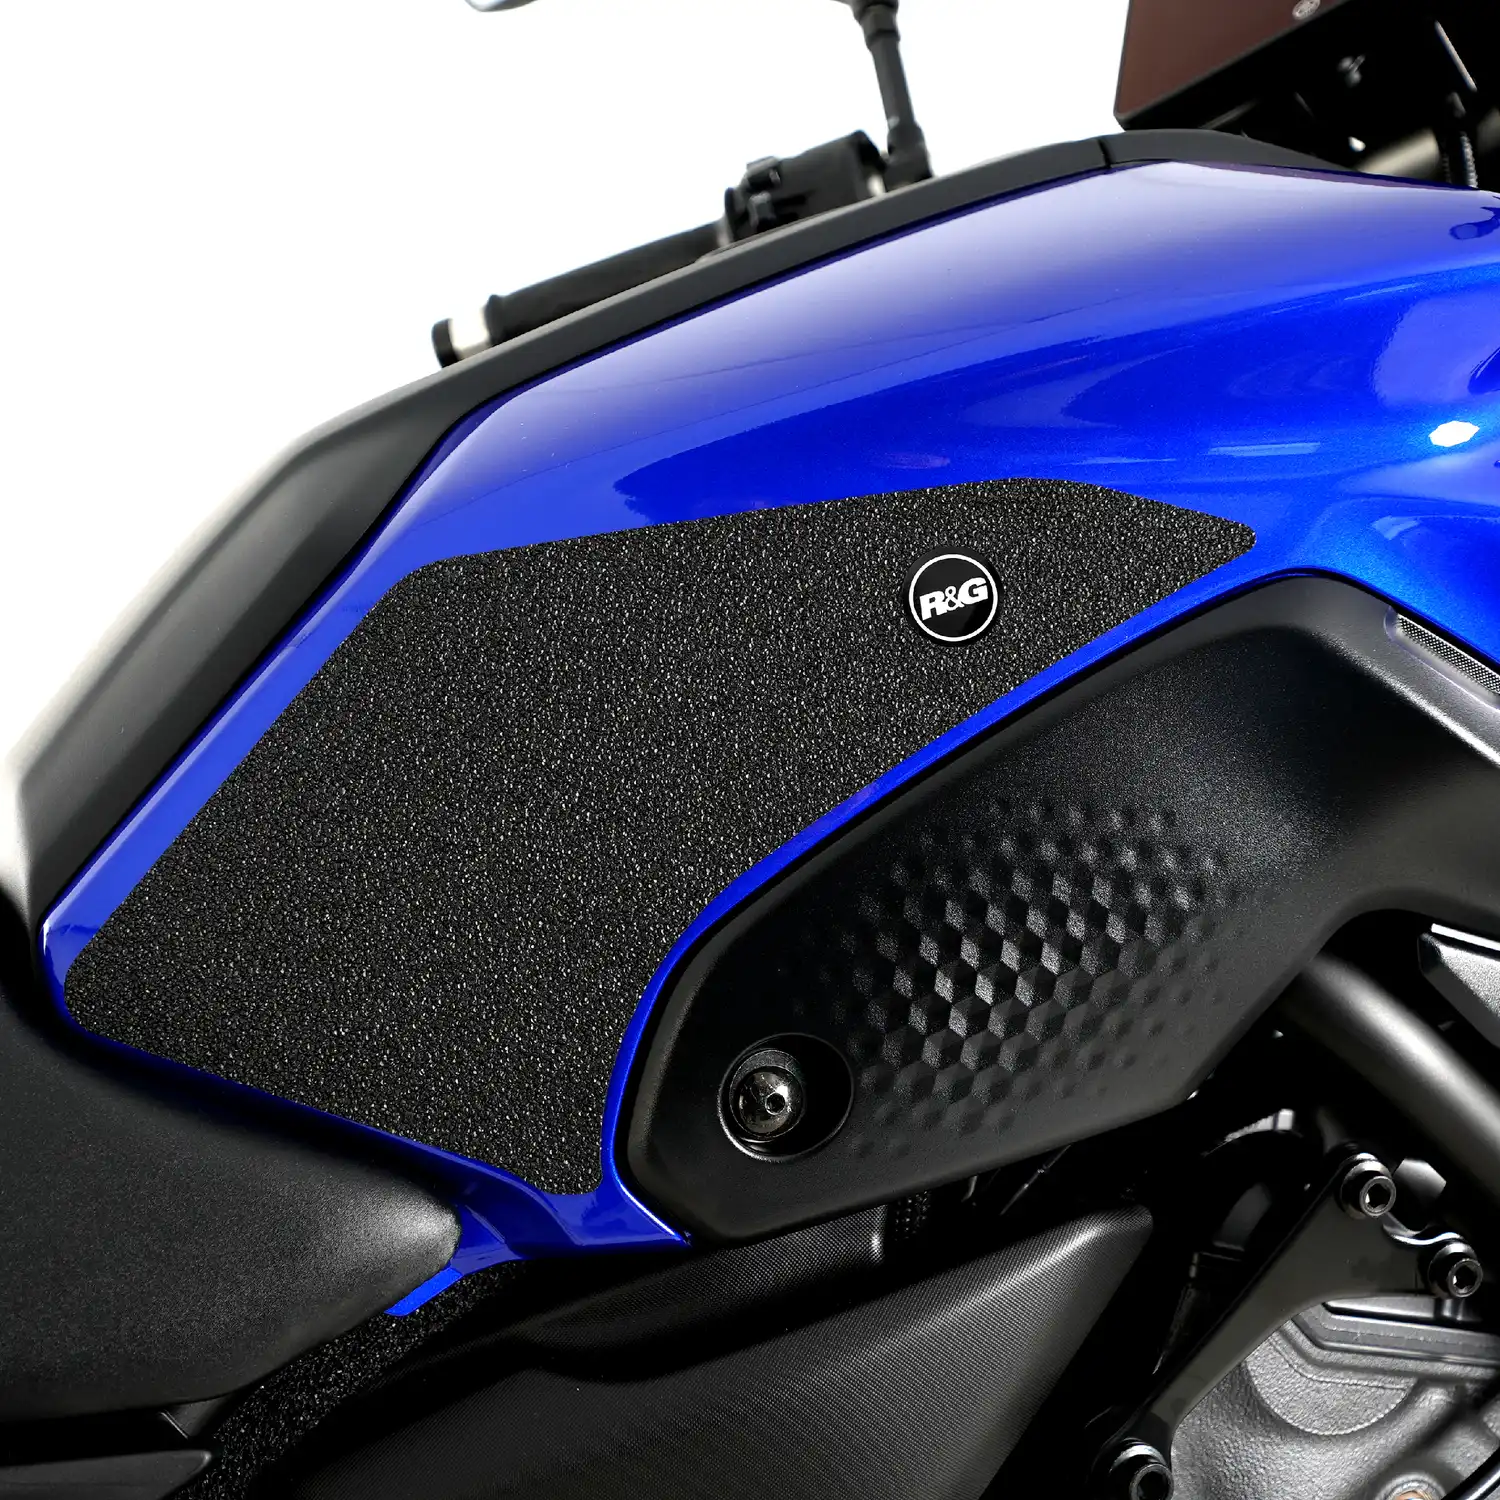 Yamaha MT 07 azul